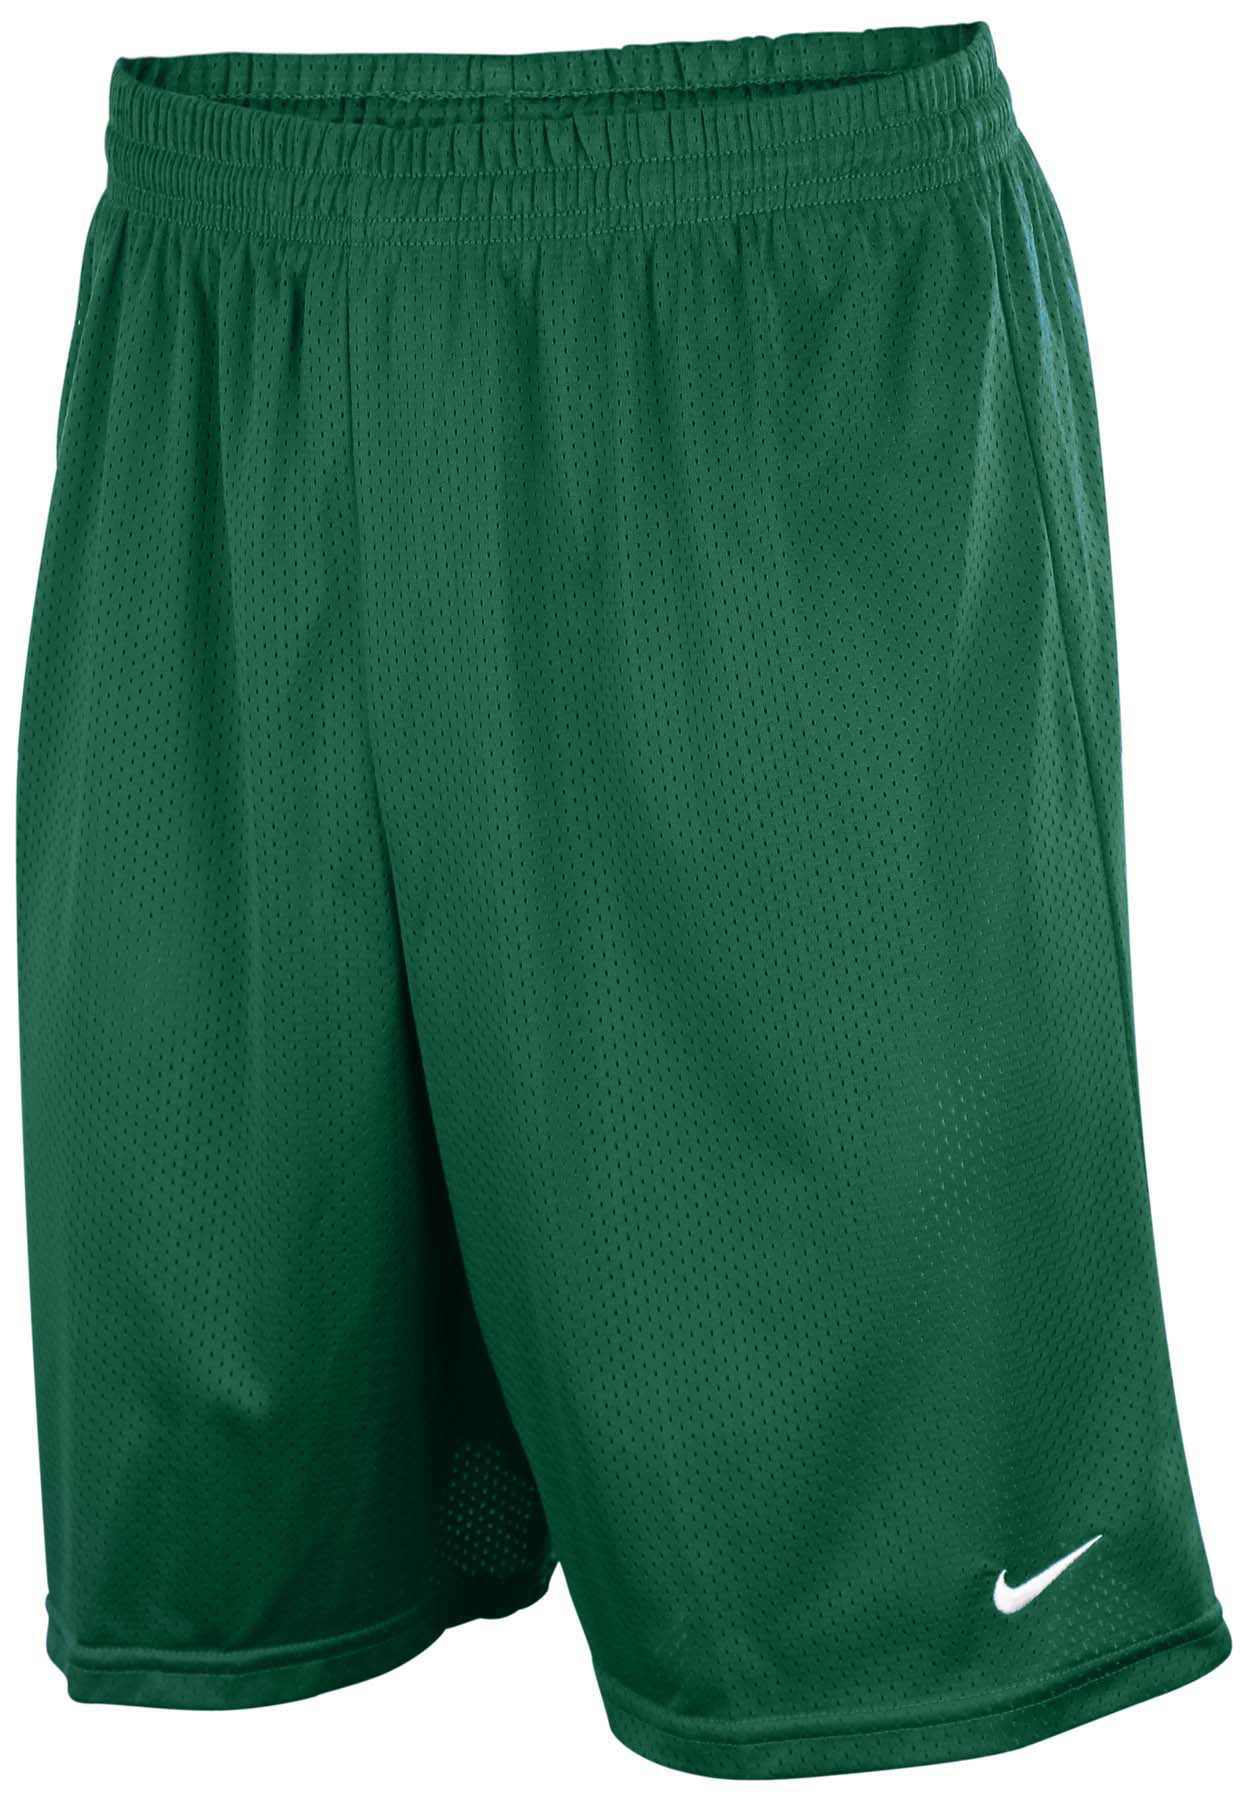 Nike Men's Big Mesh Work Out Shorts - Walmart.com